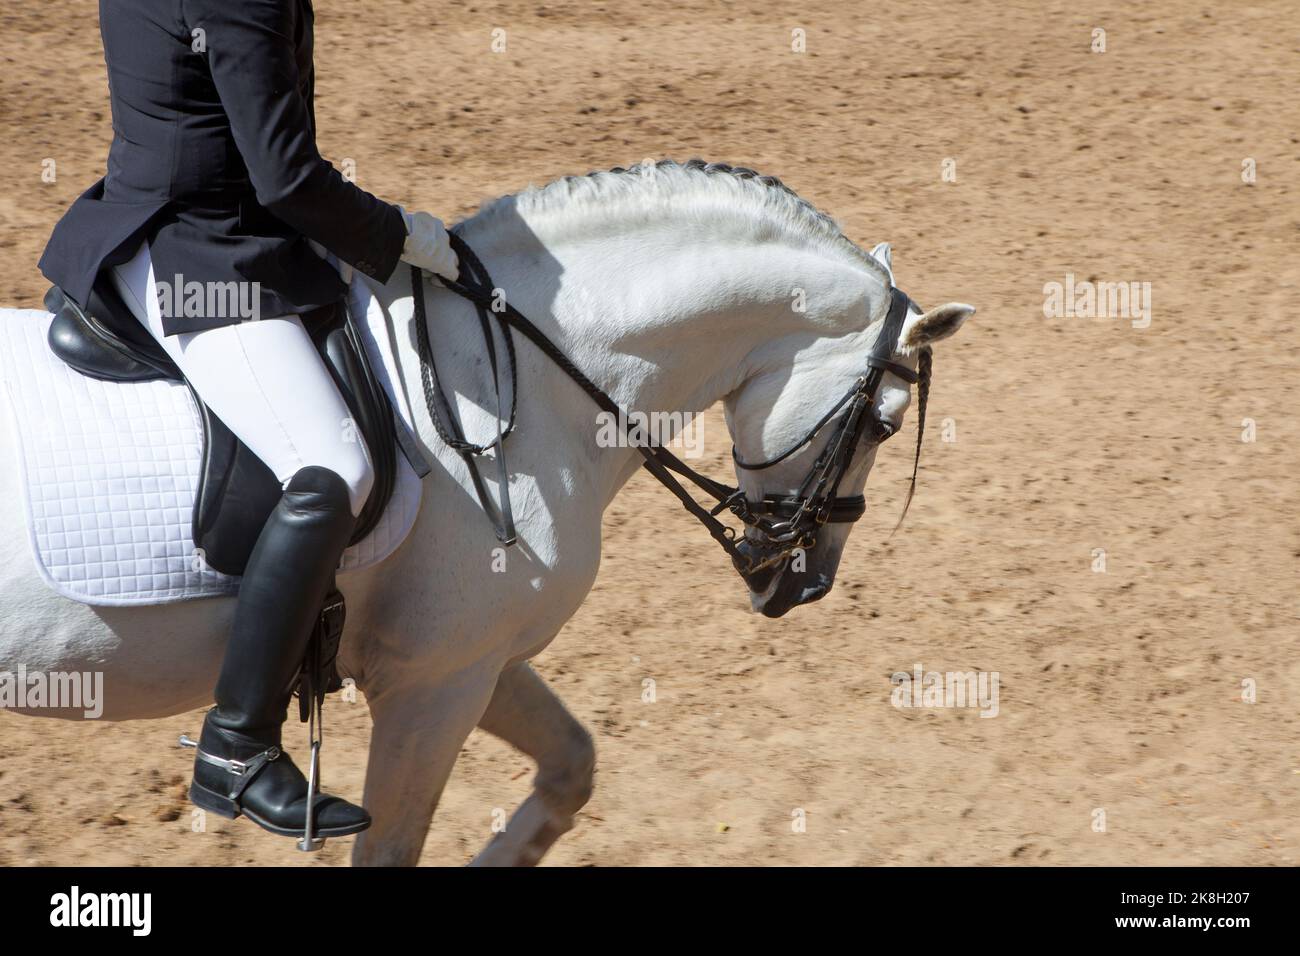 Purebred Spanish Horses exhibition. Motion bluerred shot Stock Photo